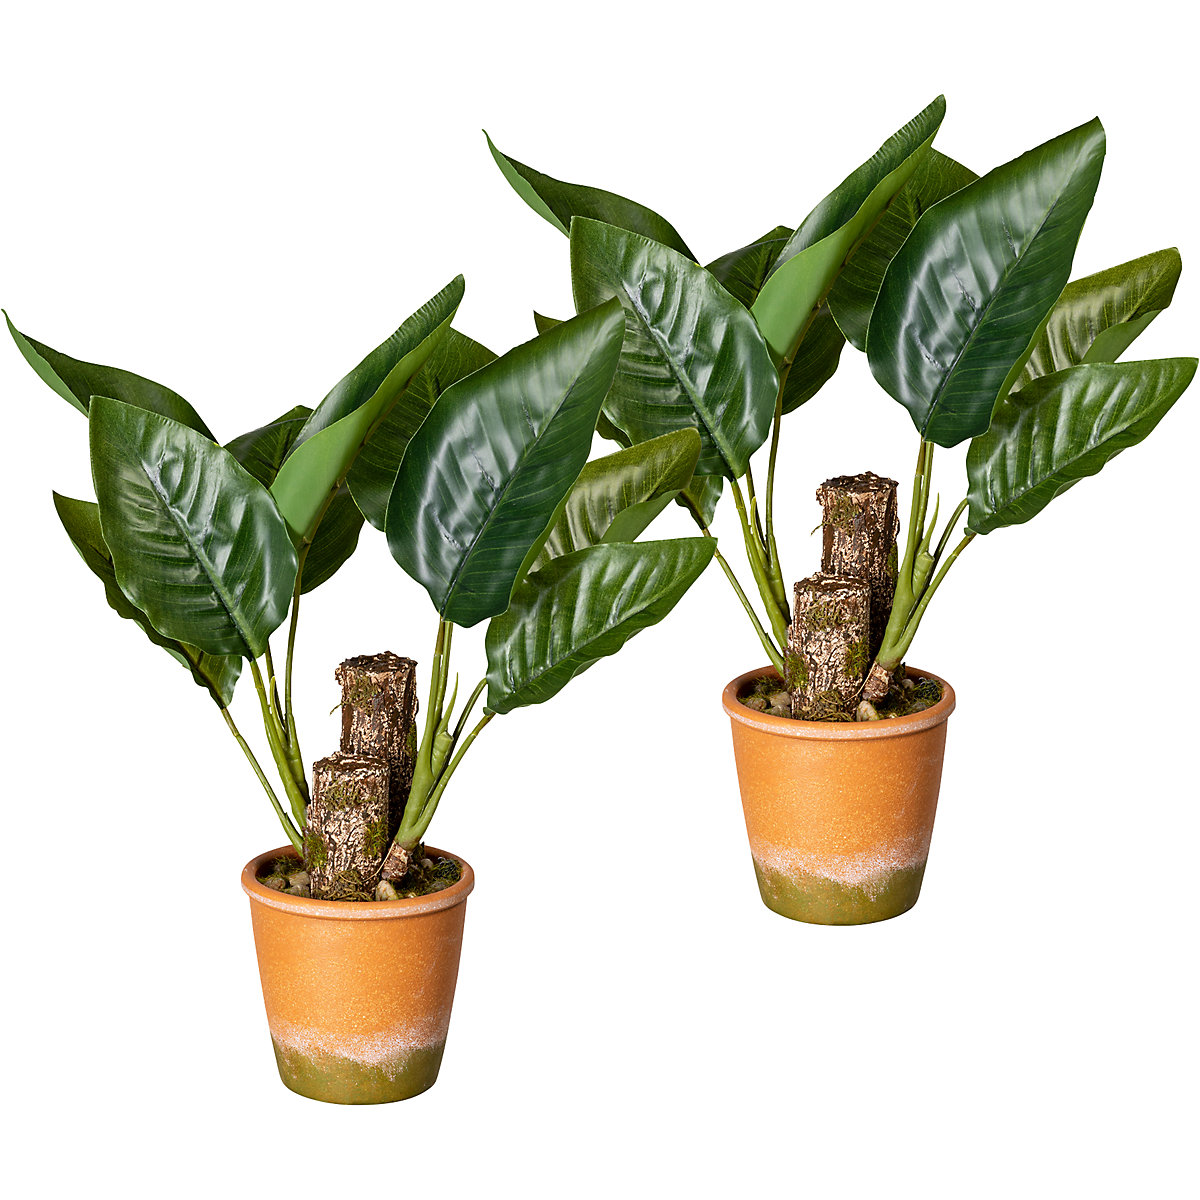 Kanna – roślina liściasta